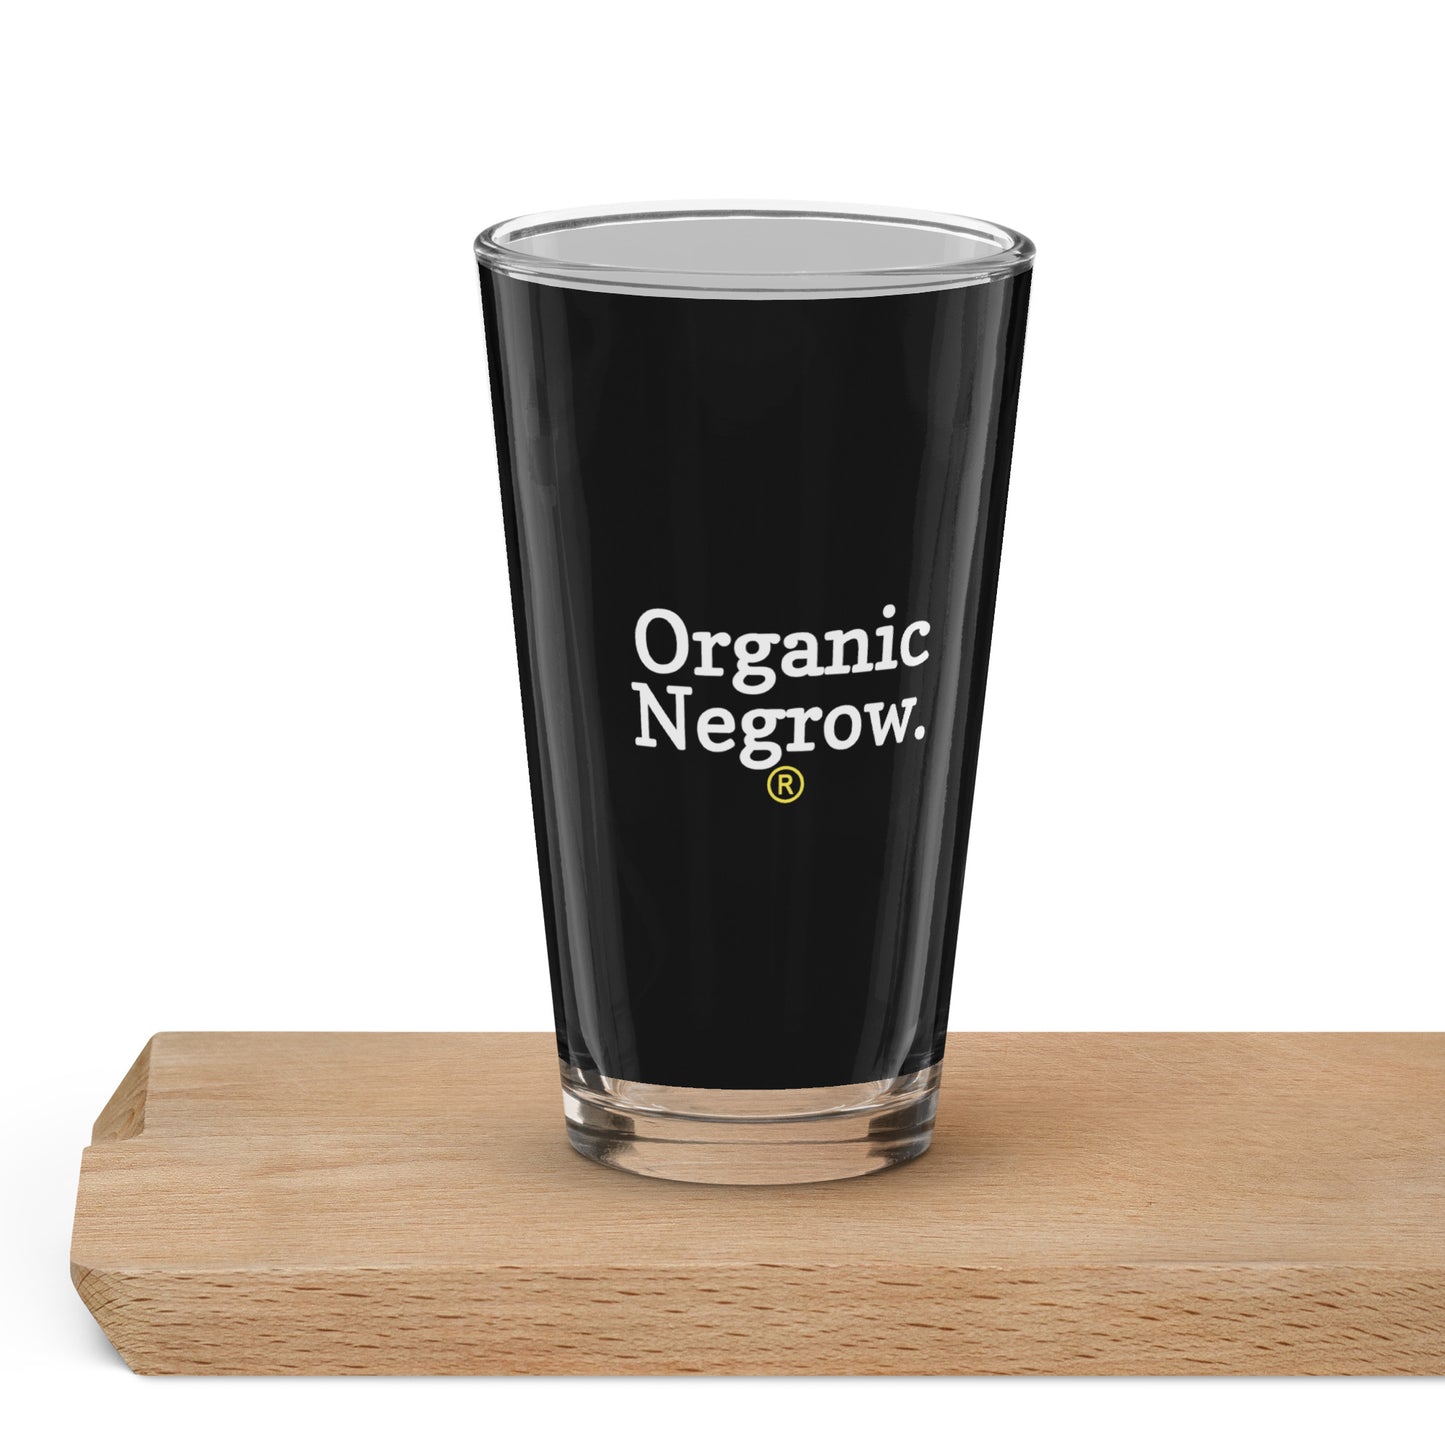 Organic Negrow Shaker pint glass / Kyrie Irving / Shaker pint glass